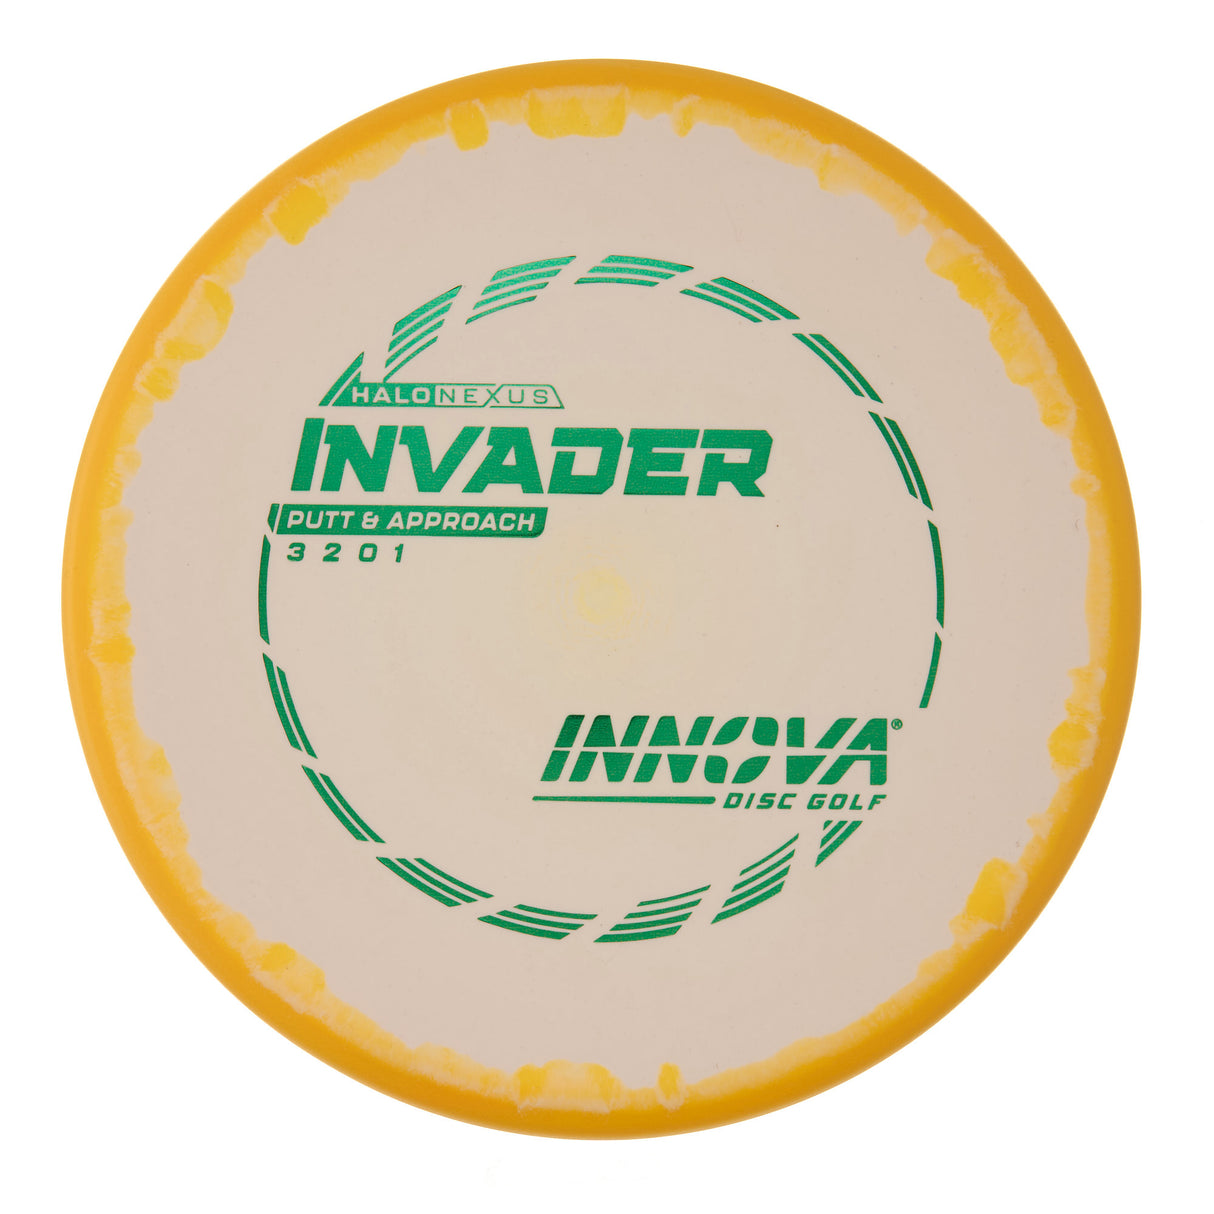 Innova Invader - Halo Nexus 175g | Style 0002